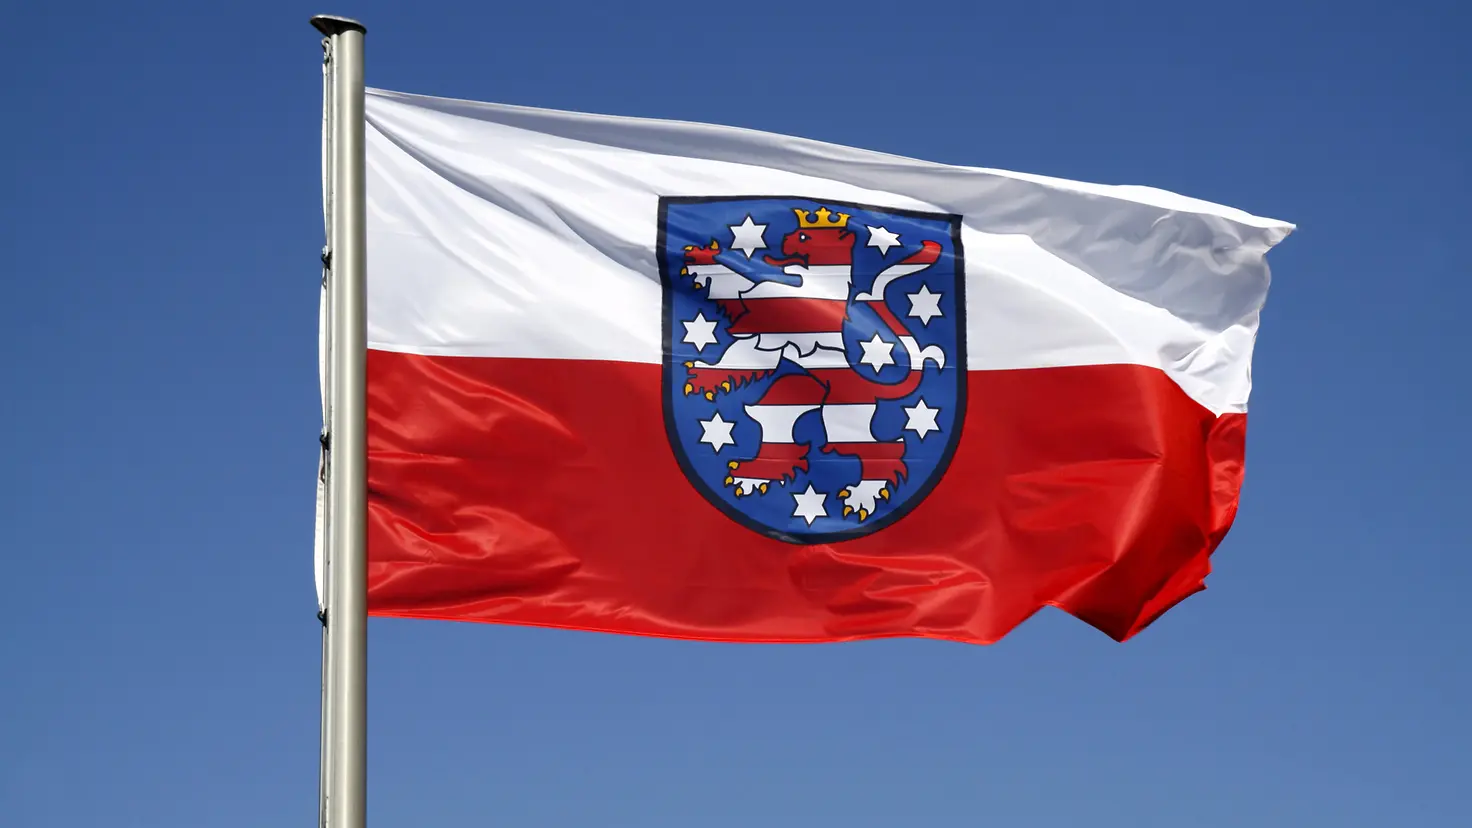 Thüringen Fahne mit Wappen